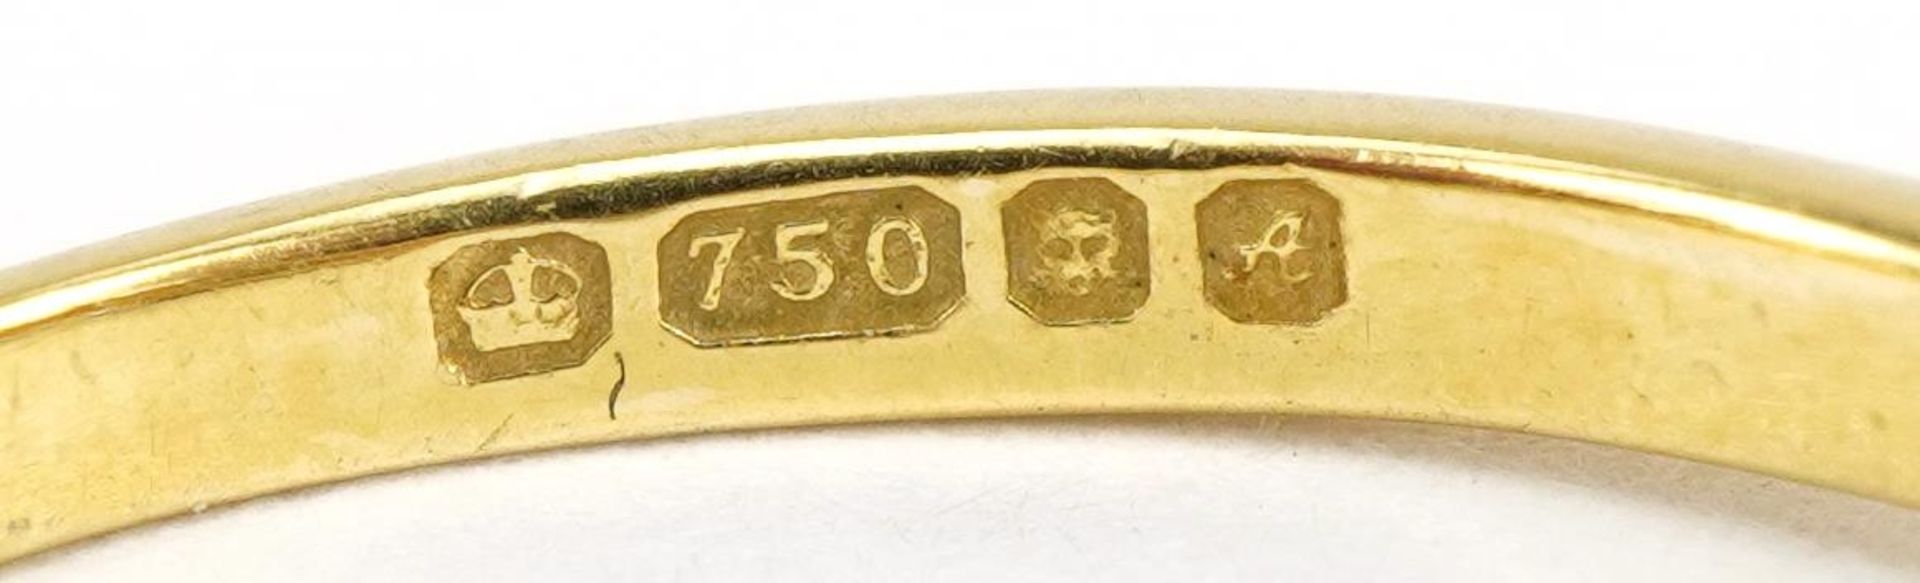 18ct gold diamond three stone ring, the largest diamond approximately 0.18 carat, size M/N, 2.4g : - Image 4 of 4